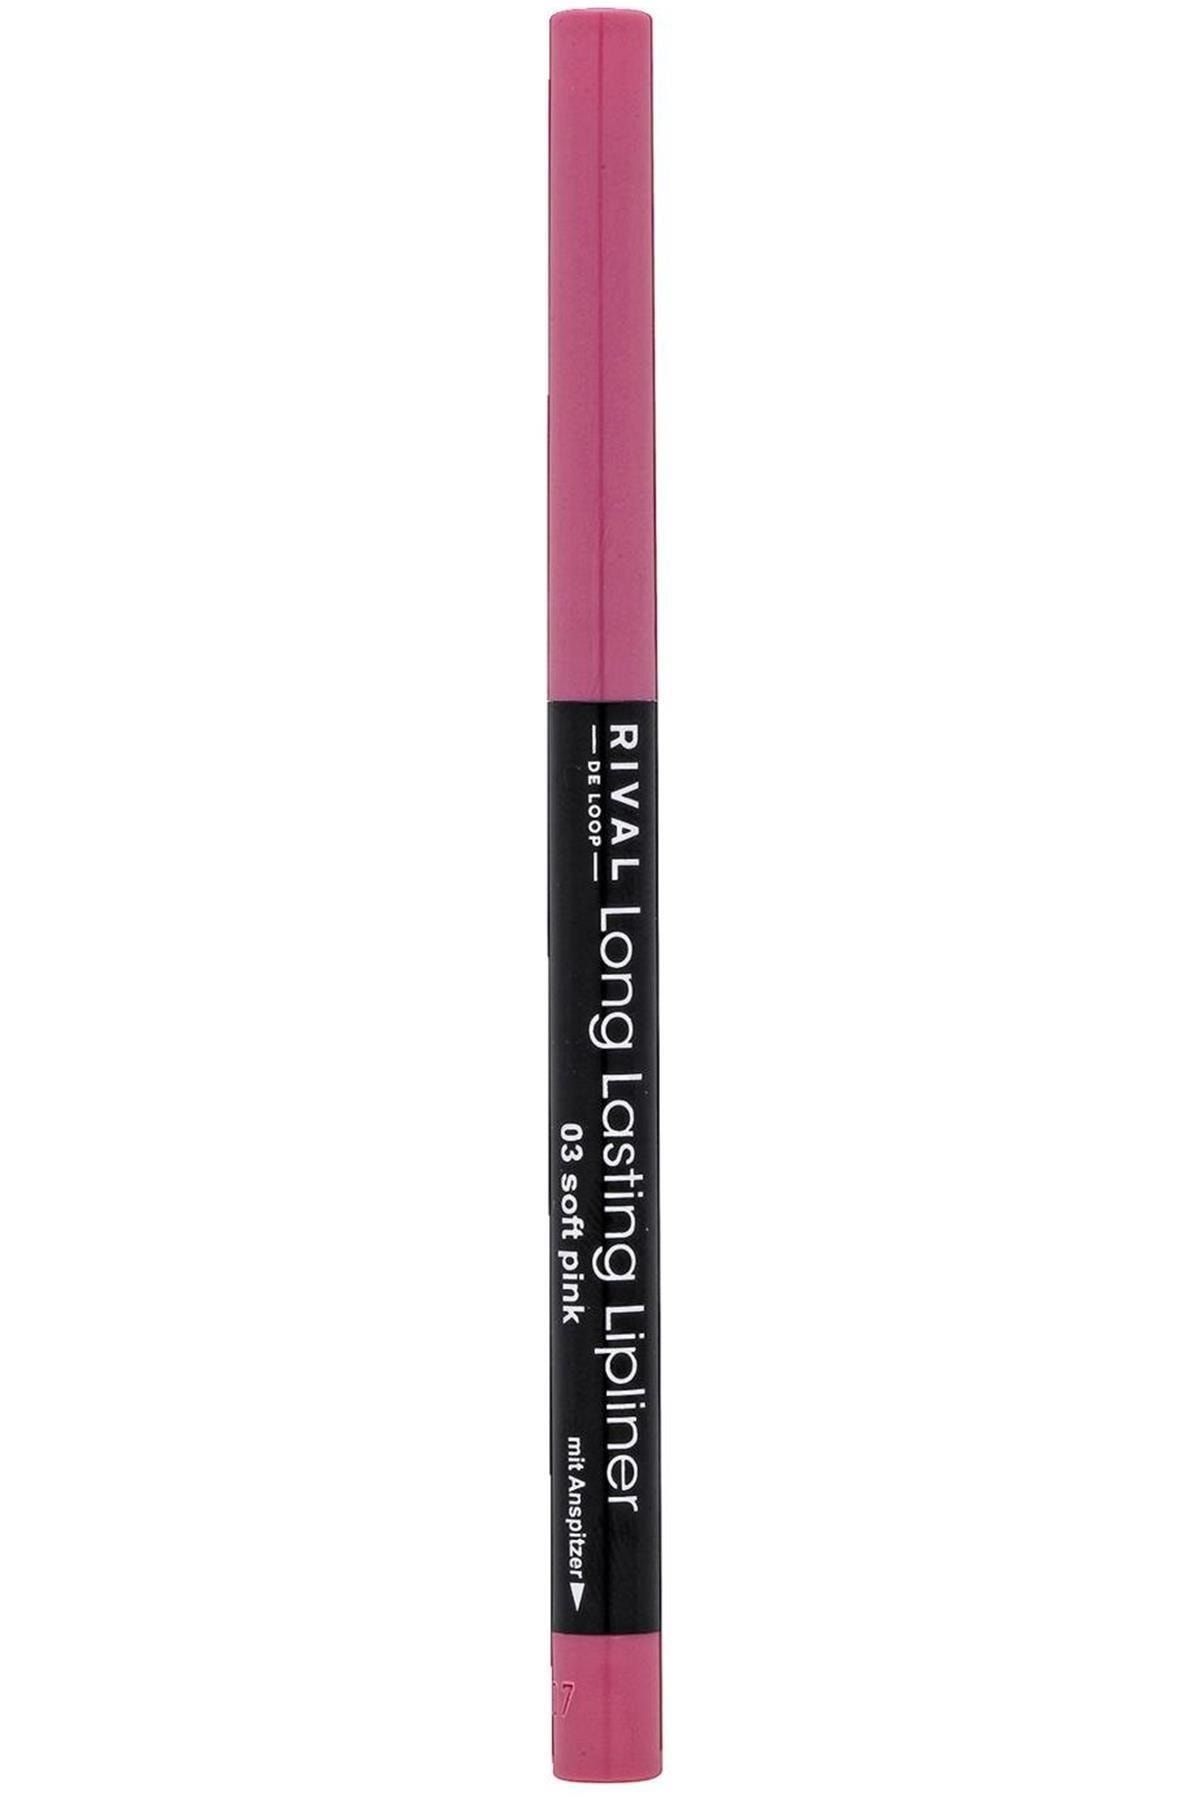 Rival De Loop Marka: Kalıcı Dudak Kalemi No:03 Soft Pink Kategori: Dudak Kalemi